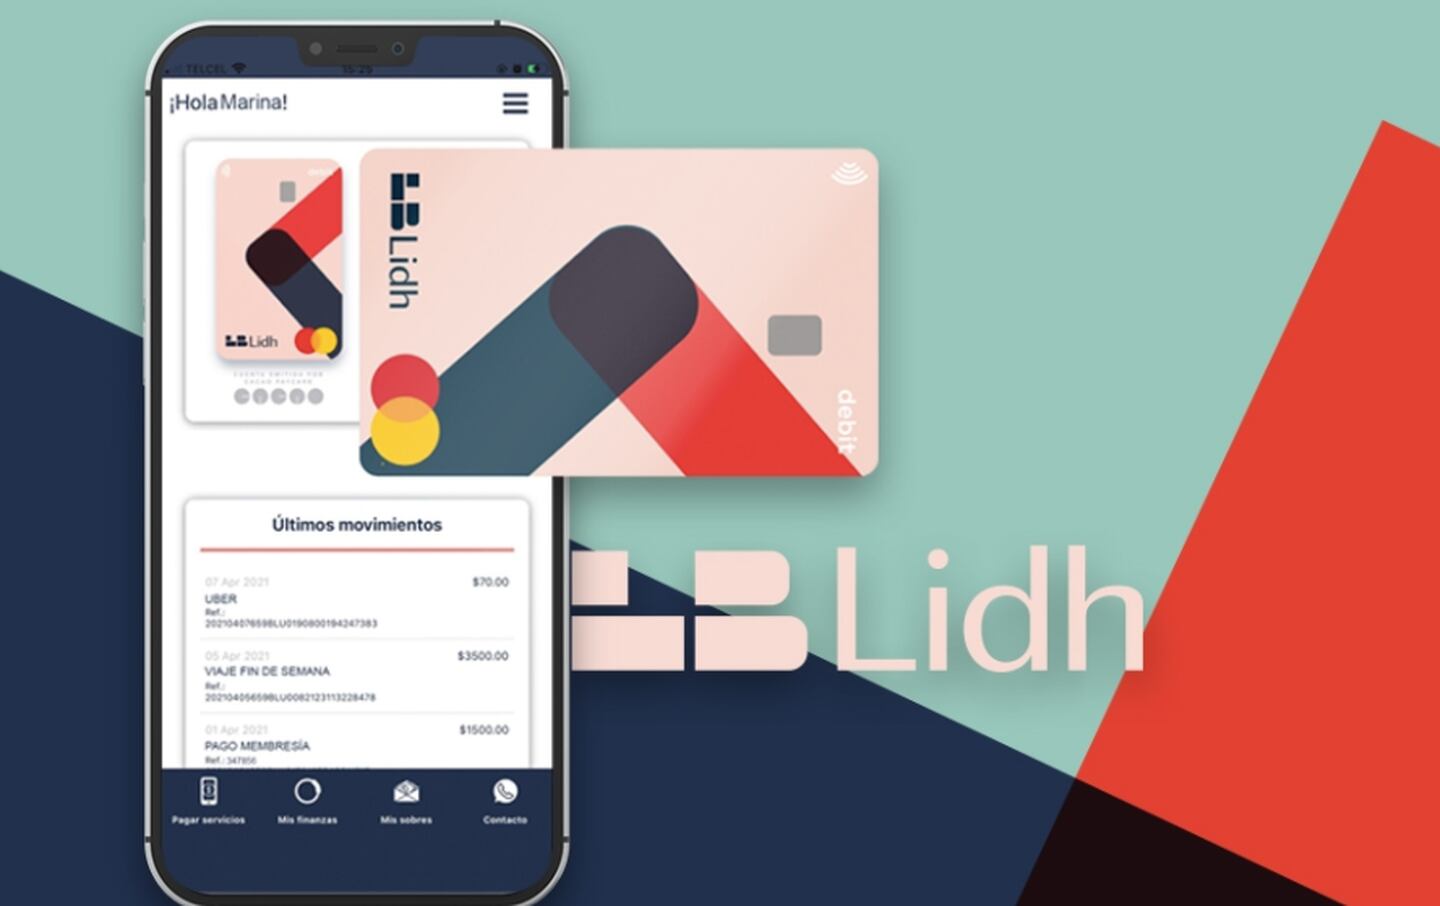 Lidh's app. Photo: Lidh/Courtesydfd